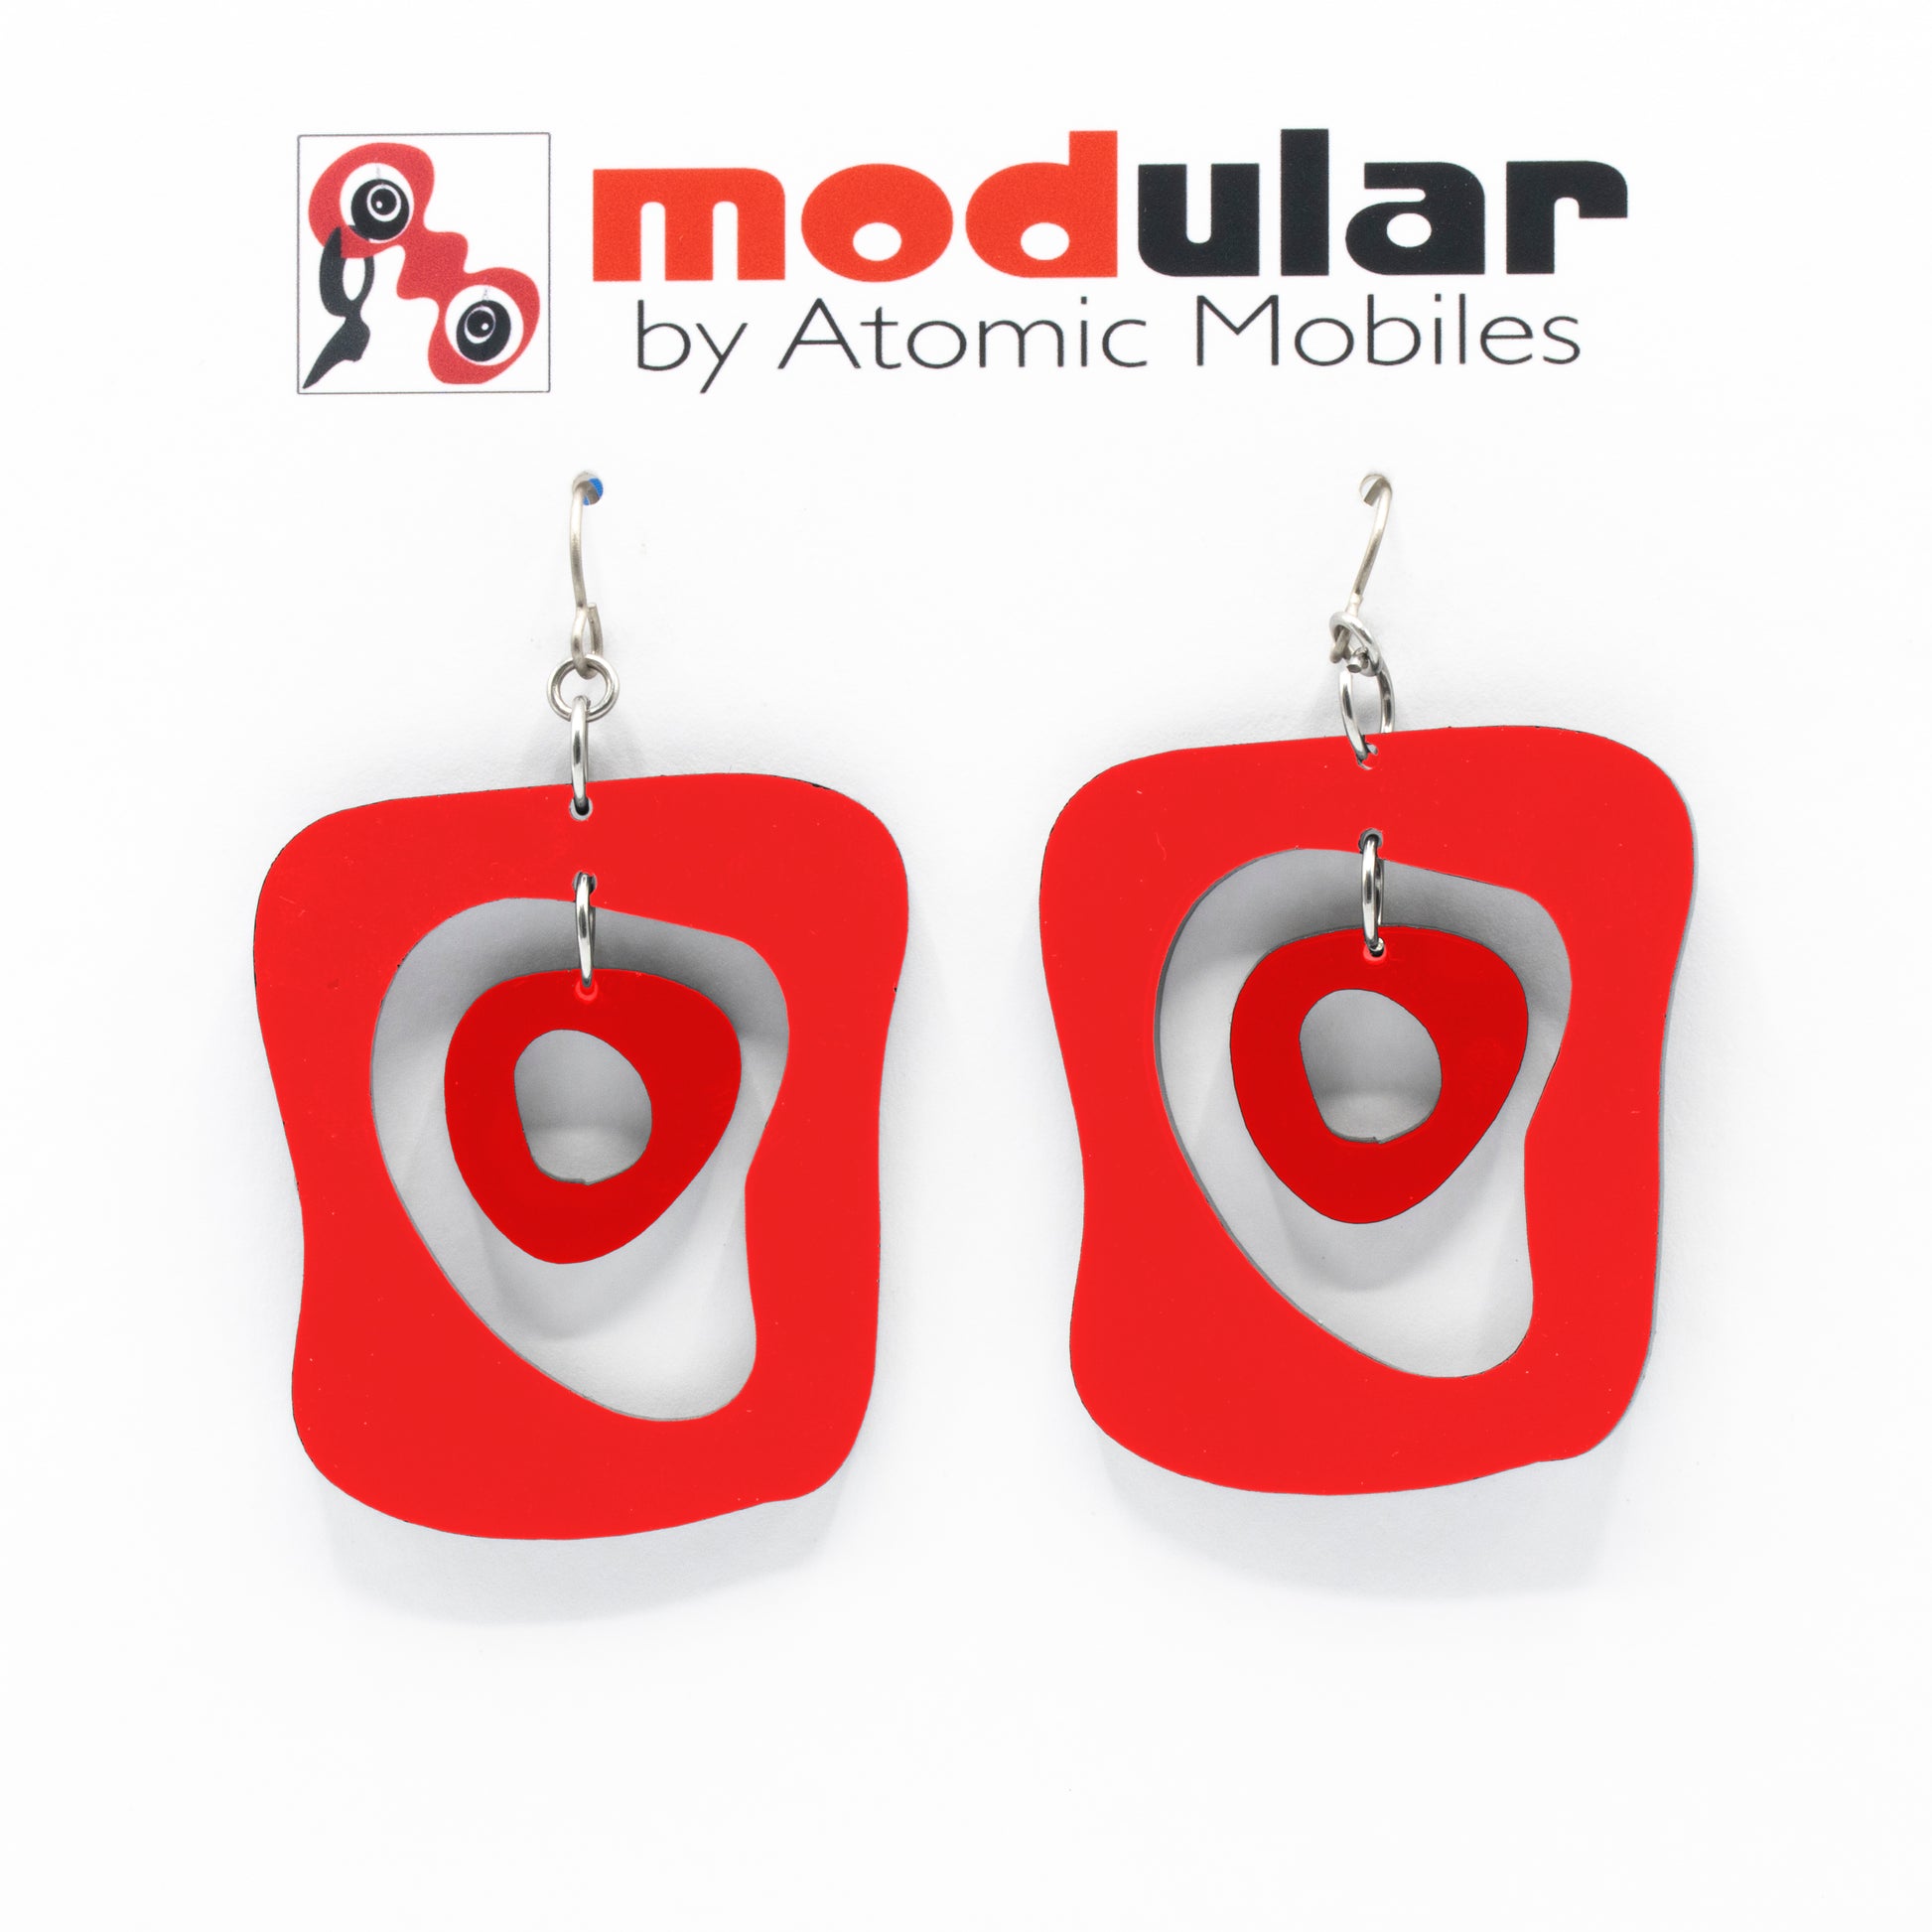 MODular Earrings - Mid Mod Statement Earrings in Red by AtomicMobiles.com - mid century inspired modern art dangle earrings